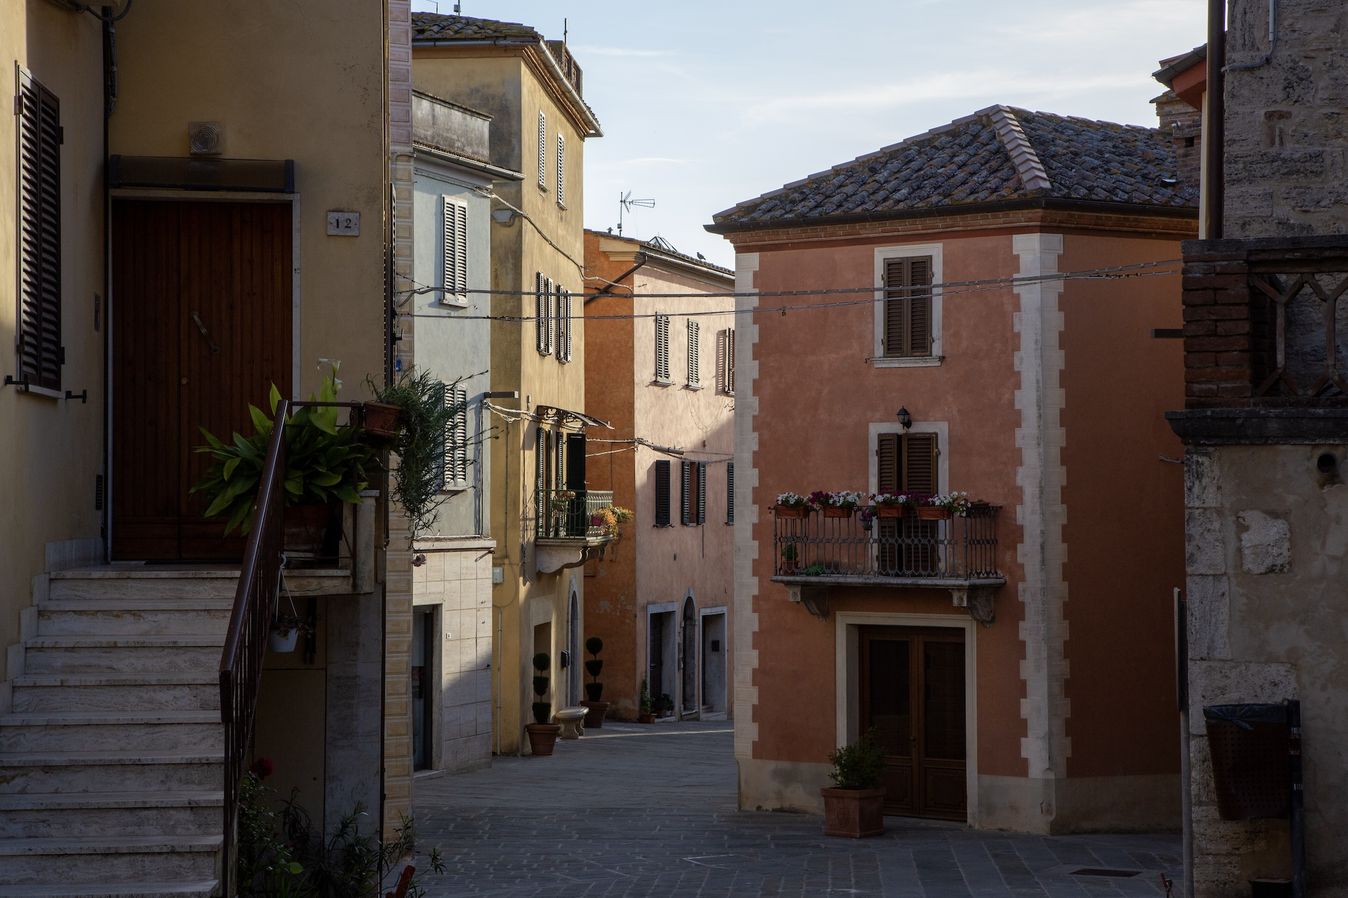 Within the streets of Rapolano Terme